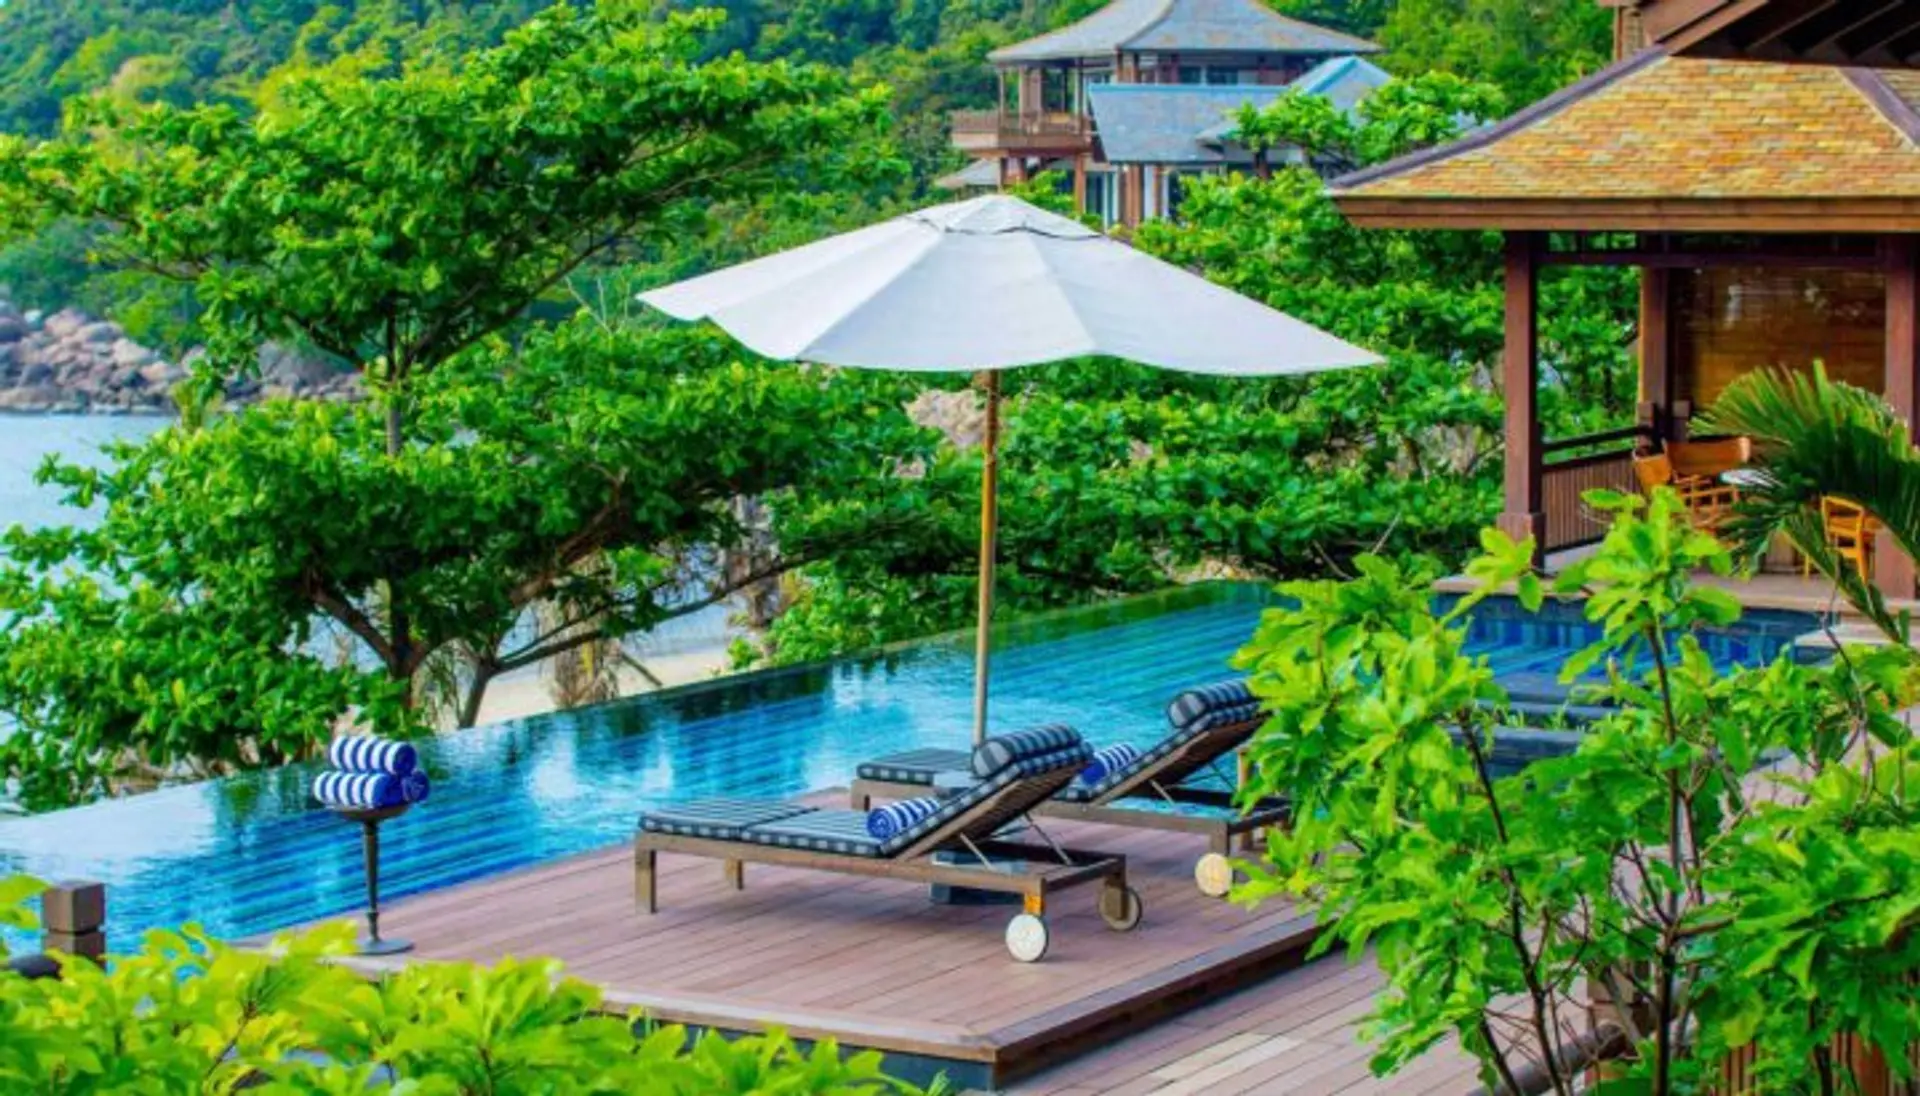 Hotels Articles - InterContinental Danang Sun Peninsula Resort, one of Vietnam’s best hotels